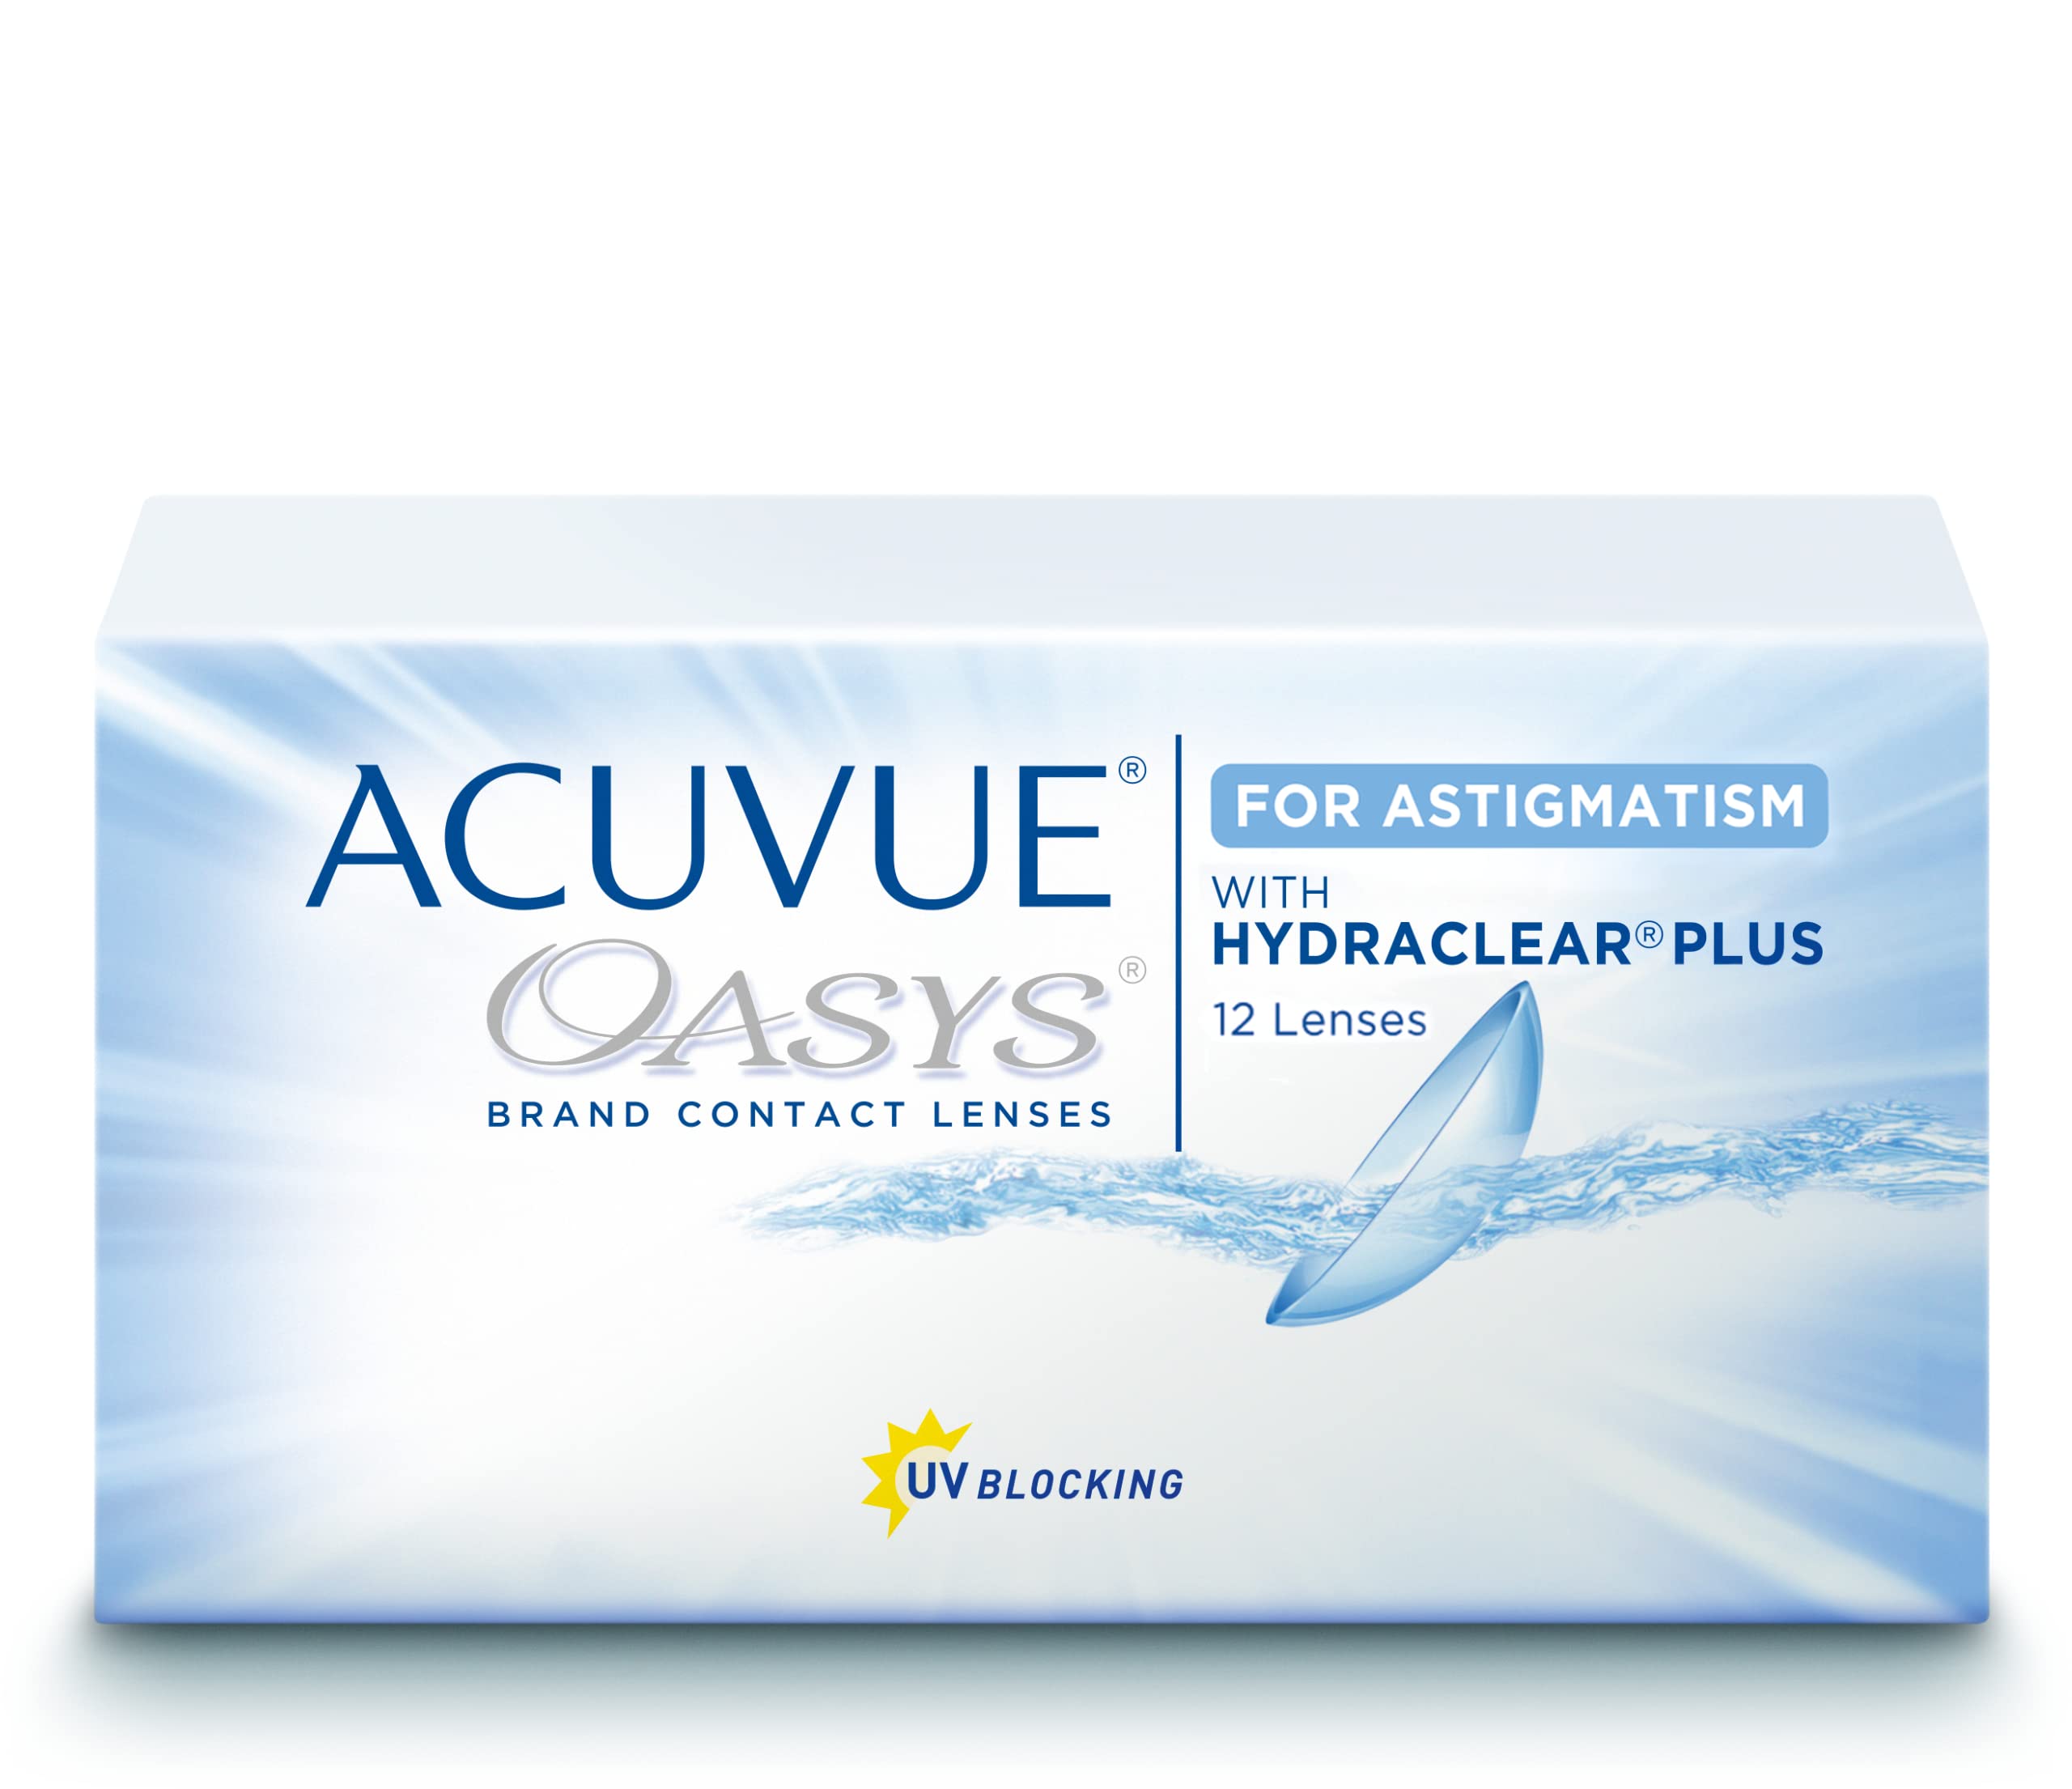 Acuvue Oasys for Astigmatism 2-Wochenlinsen weich, 12 Stück/BC 8.6 mm/DIA 14.5 / CYL -2.25 / Achse 170/1.25 Dioptrien